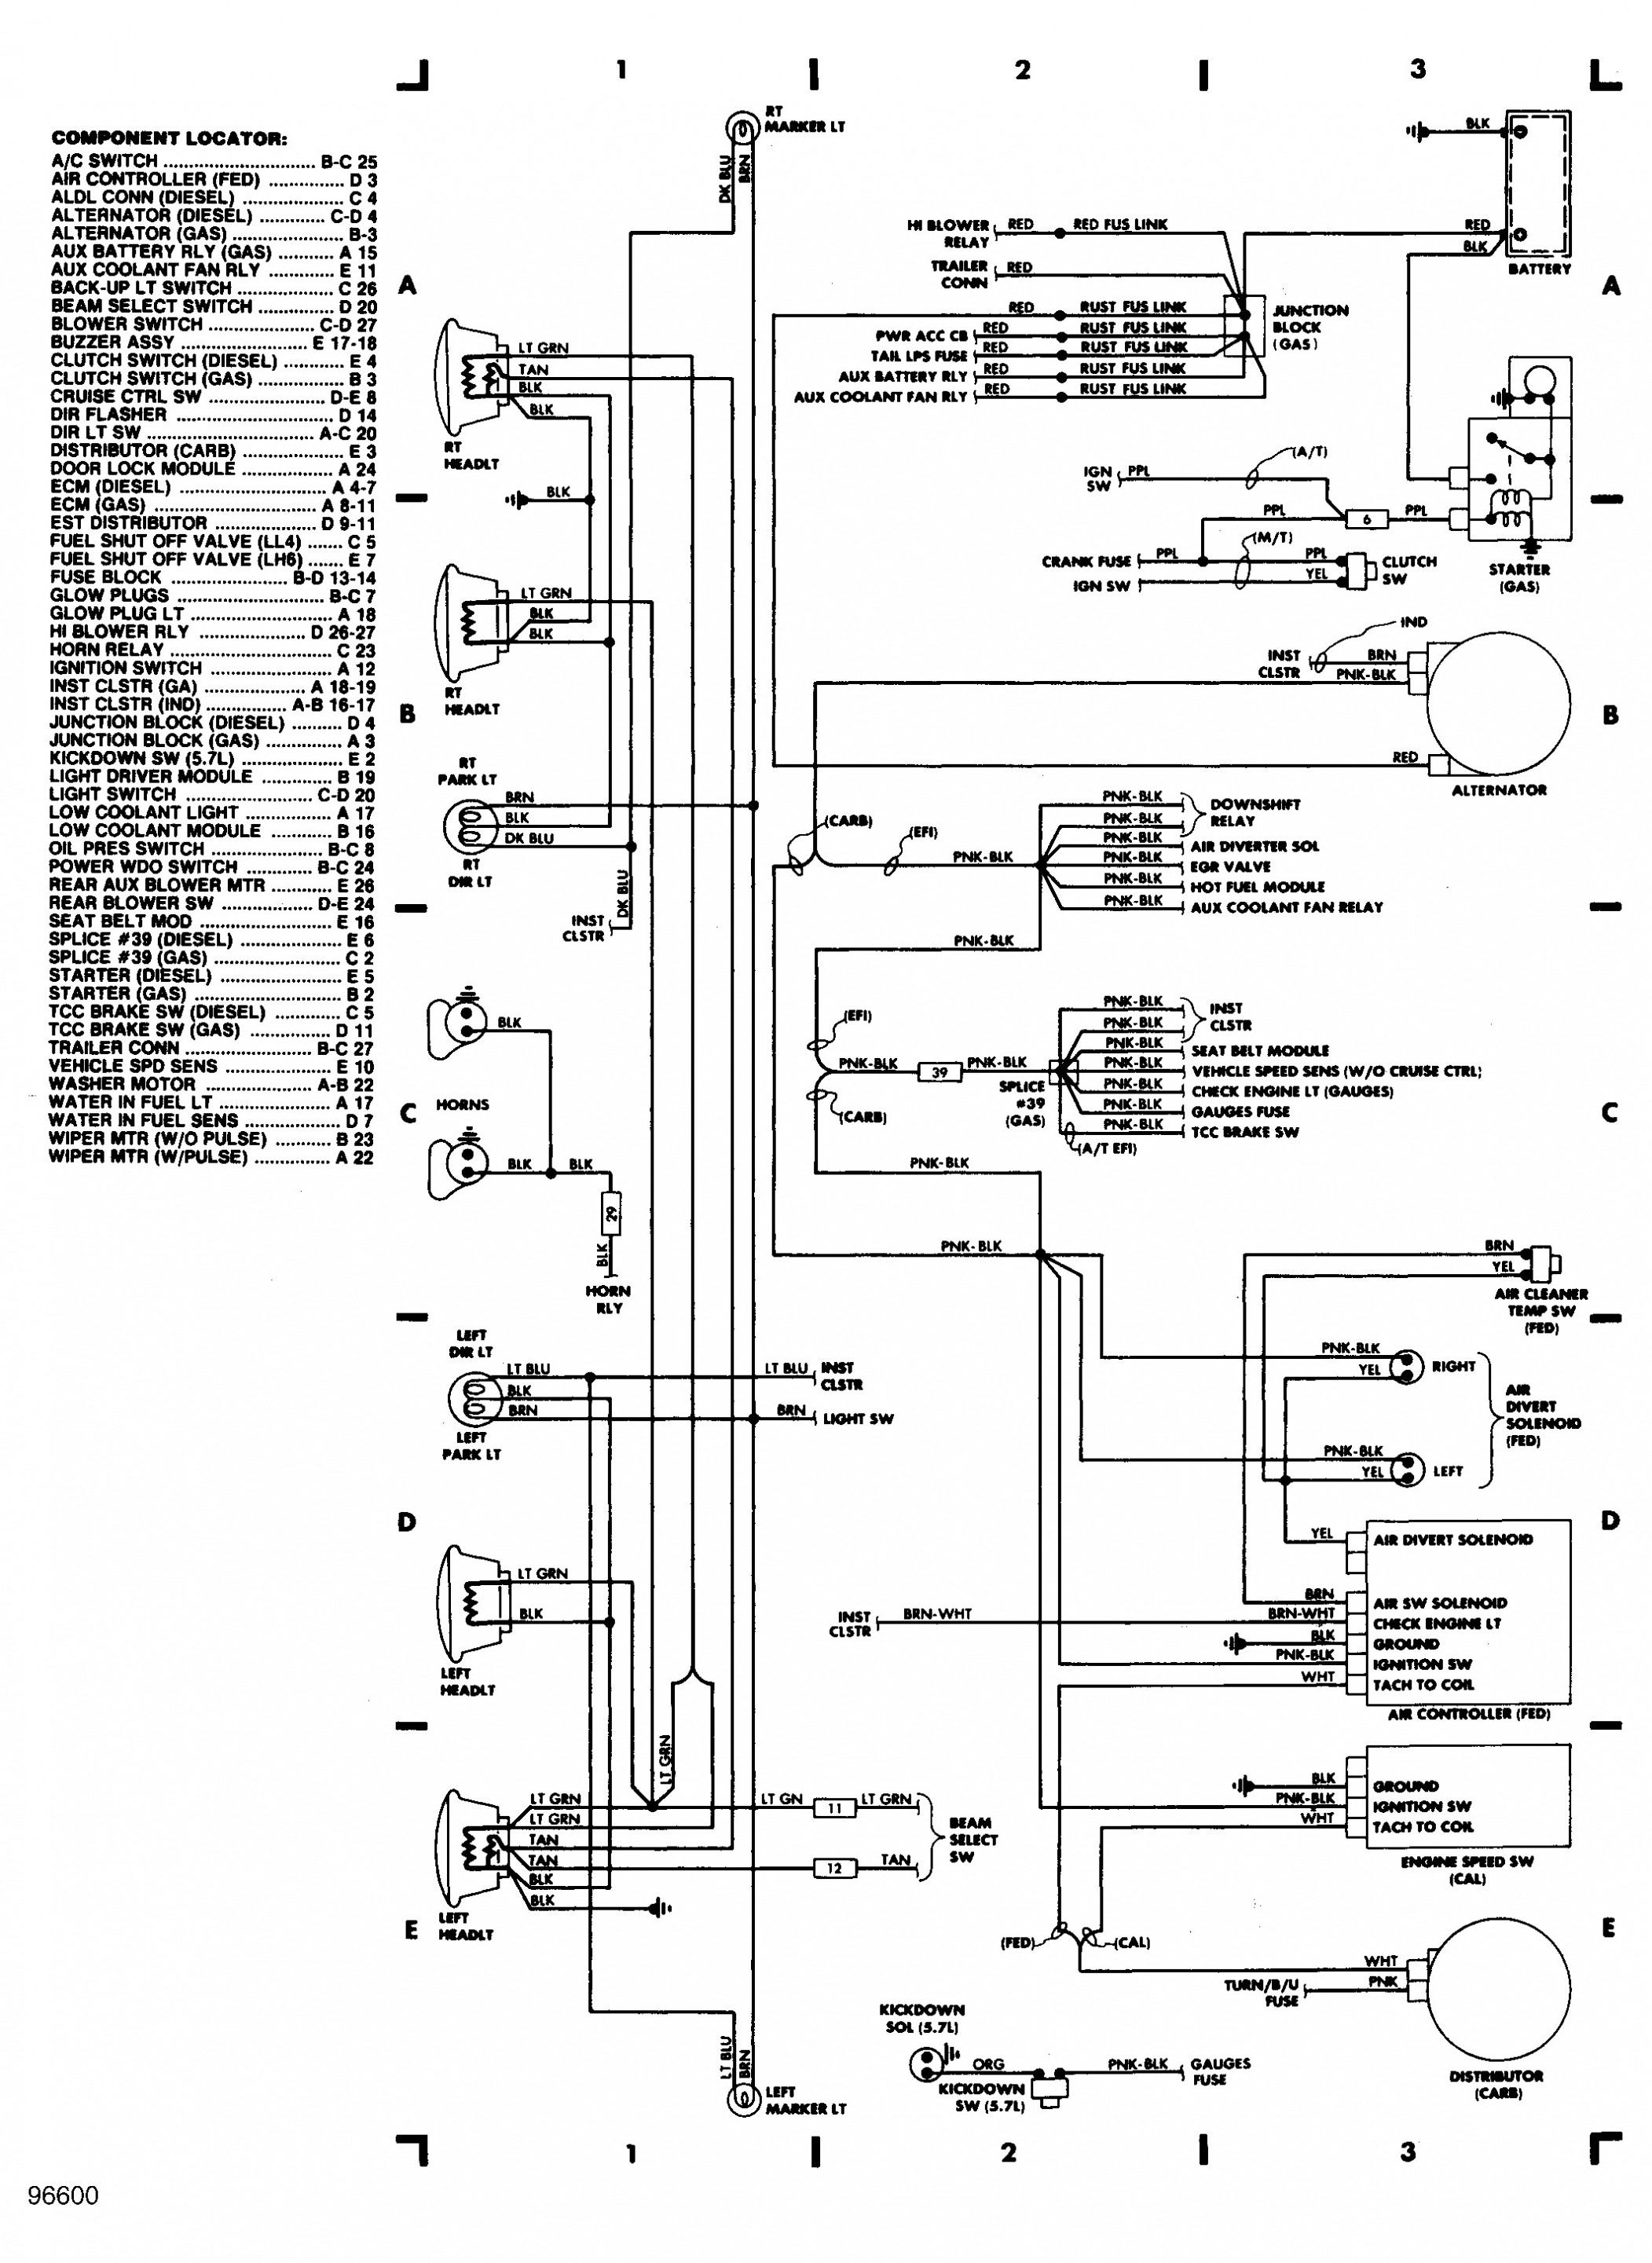 Pdf 350 Distributor Wiring Collection – Wiring Diagram Collection – S10 Wiring Diagram